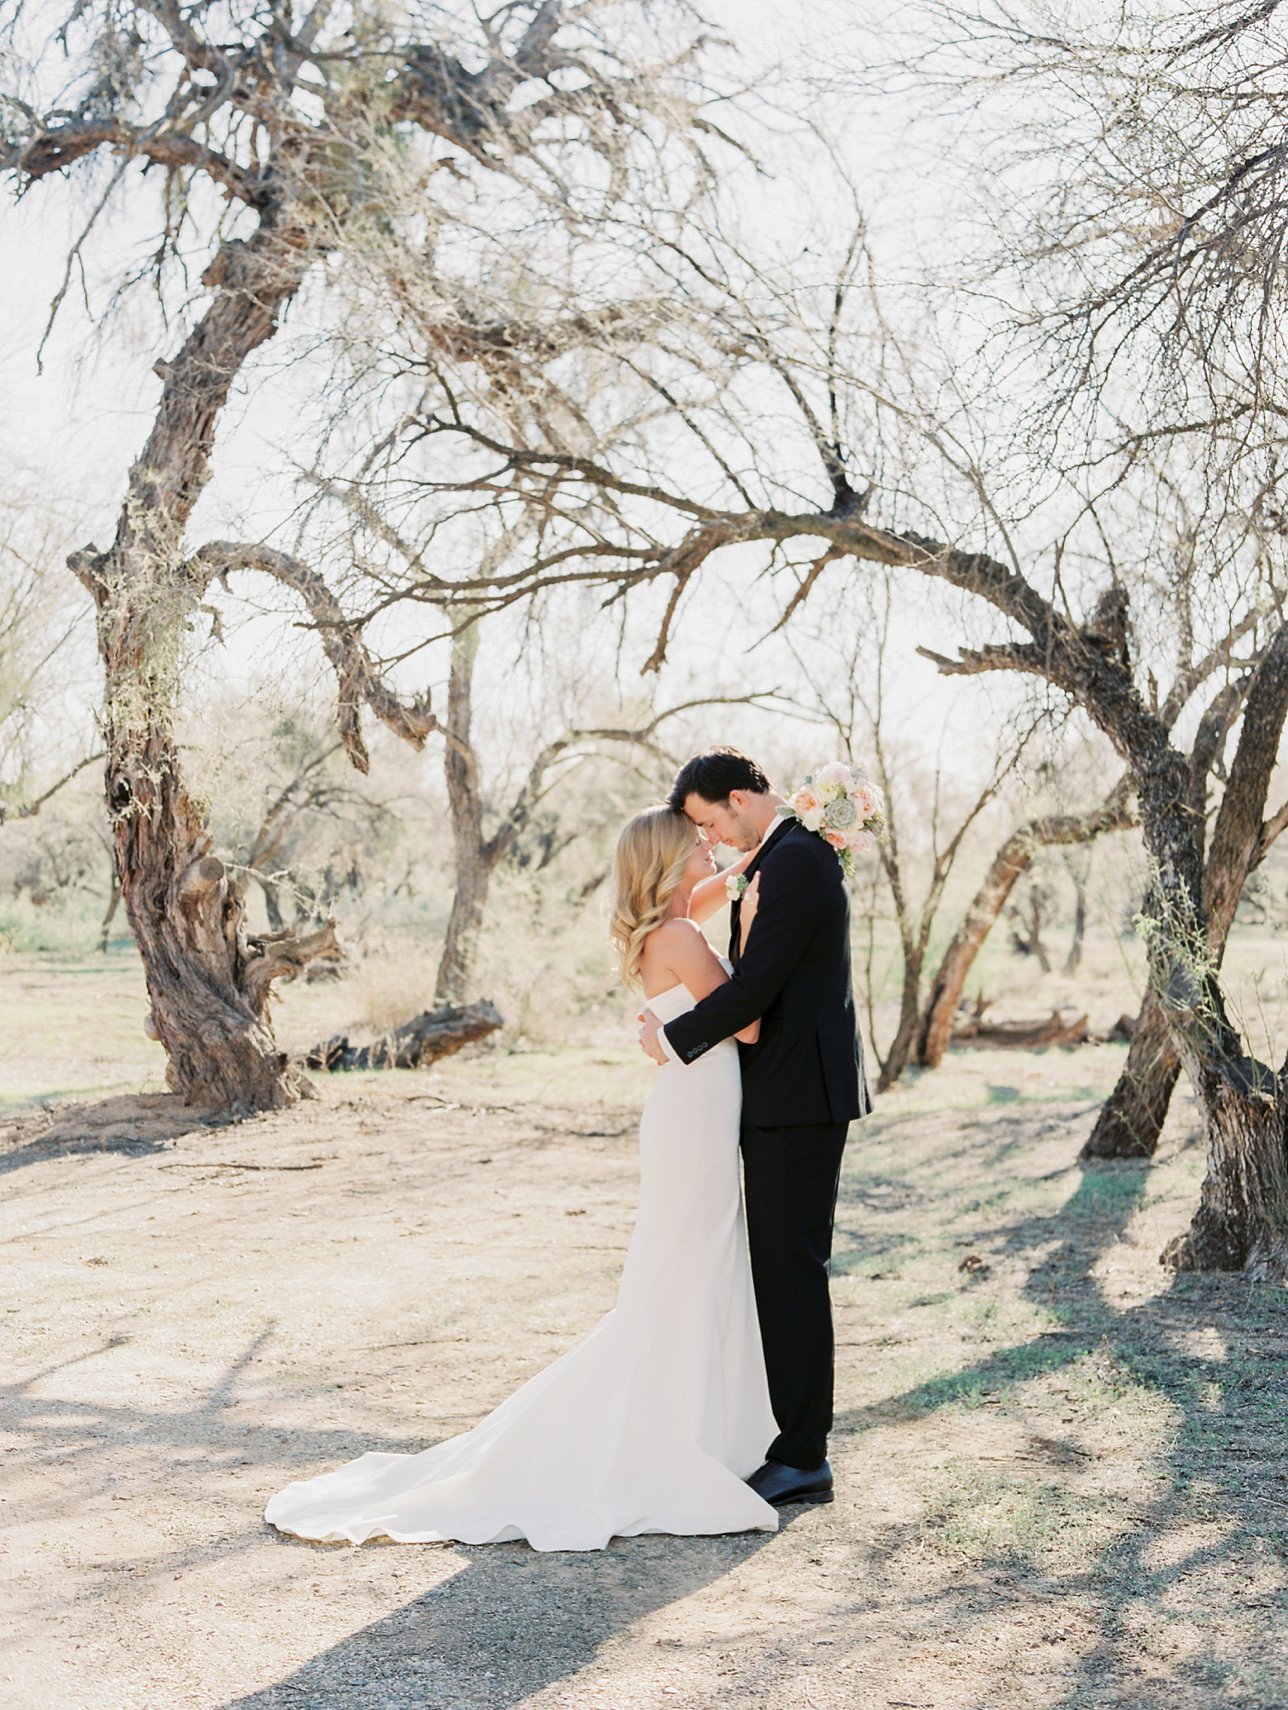 Private Estate wedding photos - Scottsdale Wedding Photographer | Rachel Solomon Photography_7775